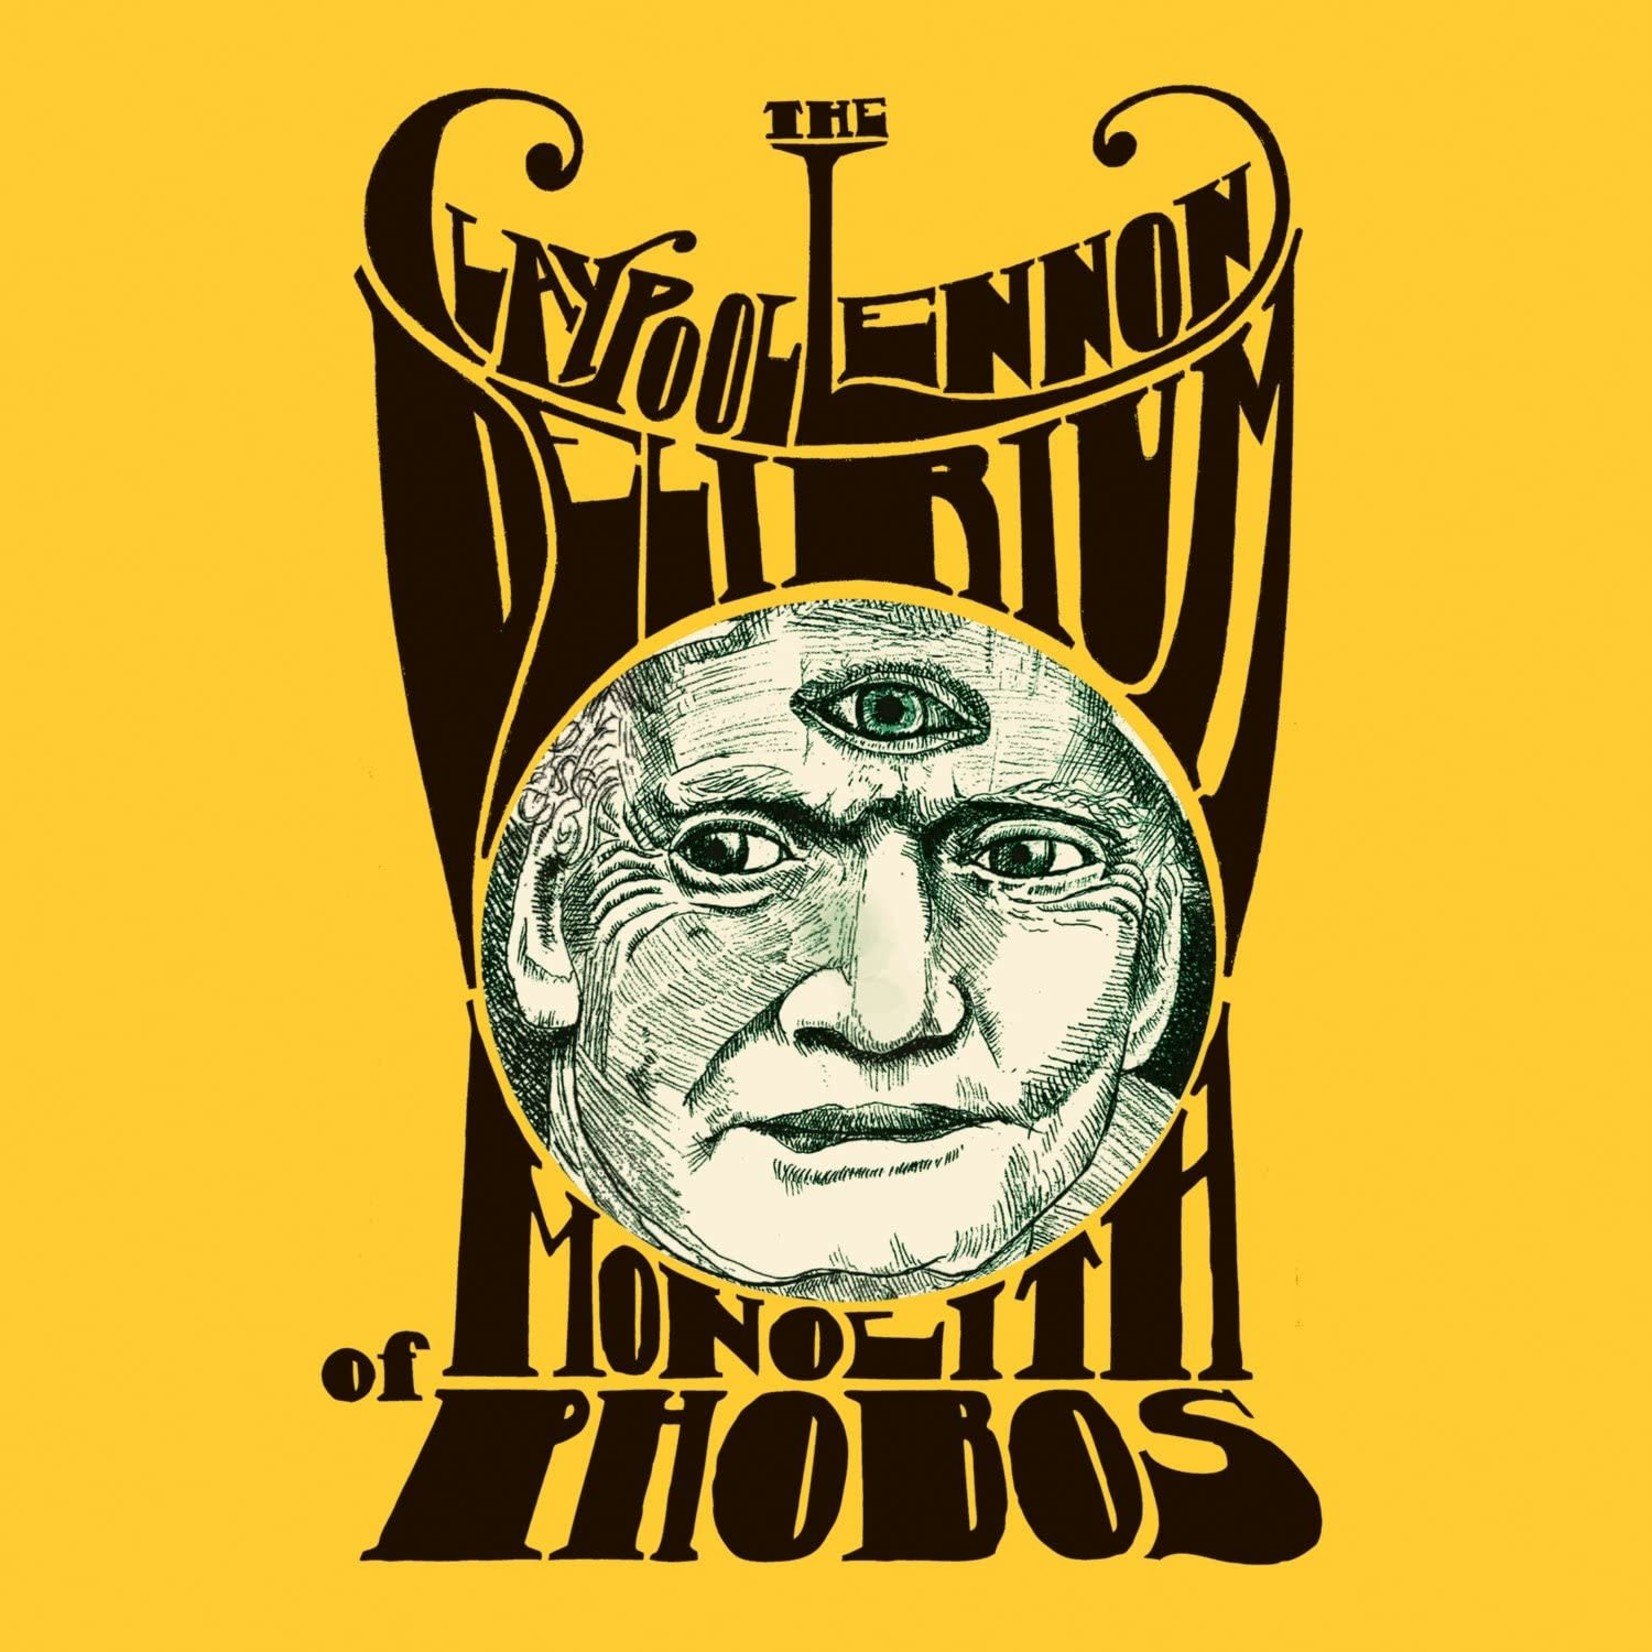 [New] Claypool Lennon Delirium - Monolith Of Phobos - Moons Of Phobos Edition (2LP, grey vinyl)